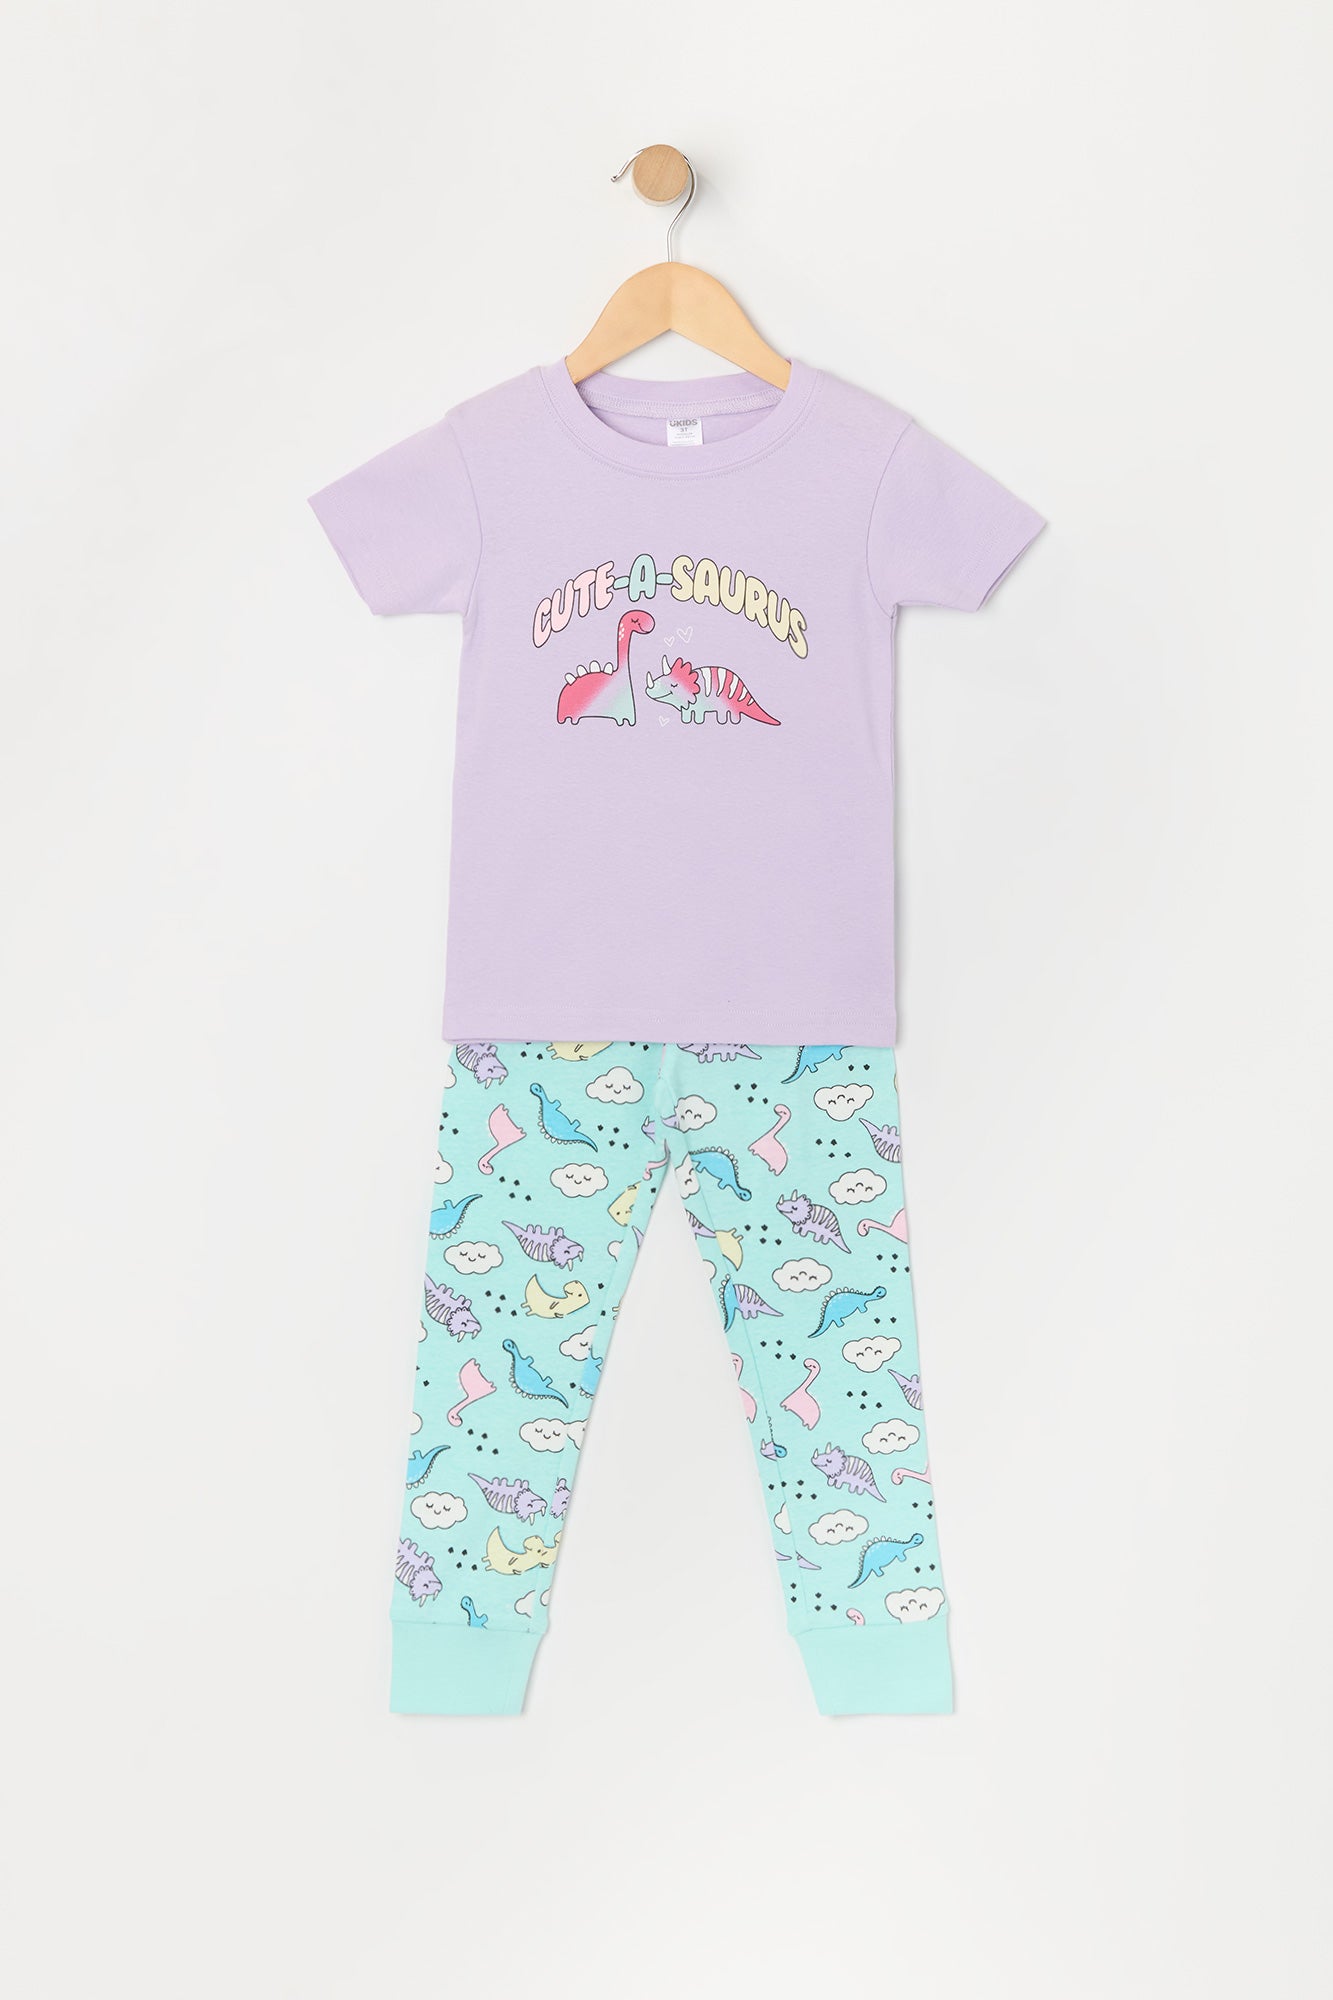 Lemons - Long Sleeve Two Piece Pajama Set – Little Barn Baby